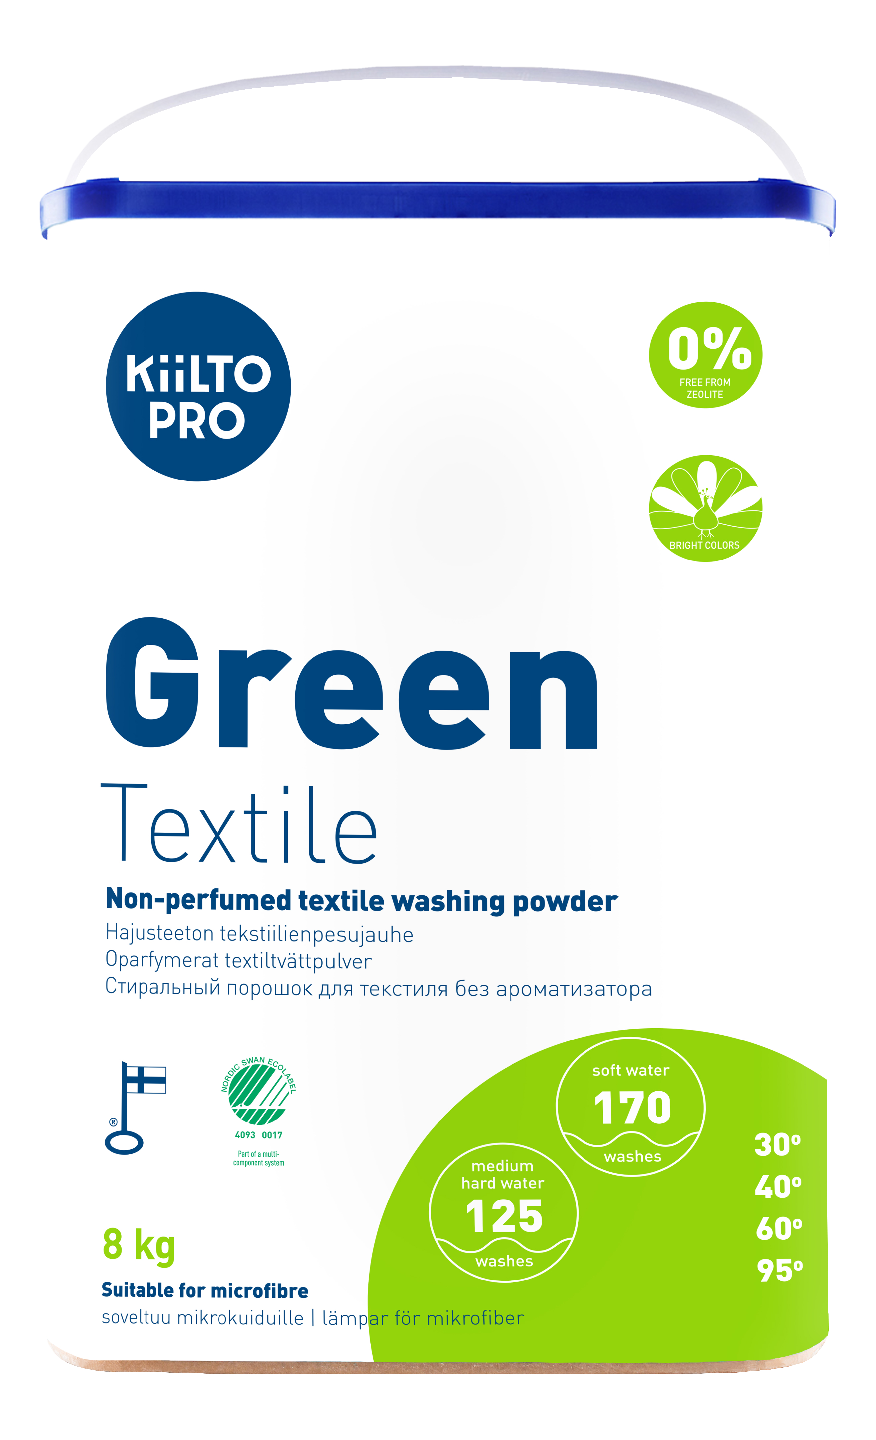 KiiltoPro Green Textile 8kg hajusteeton tekstiilienpesujauhe